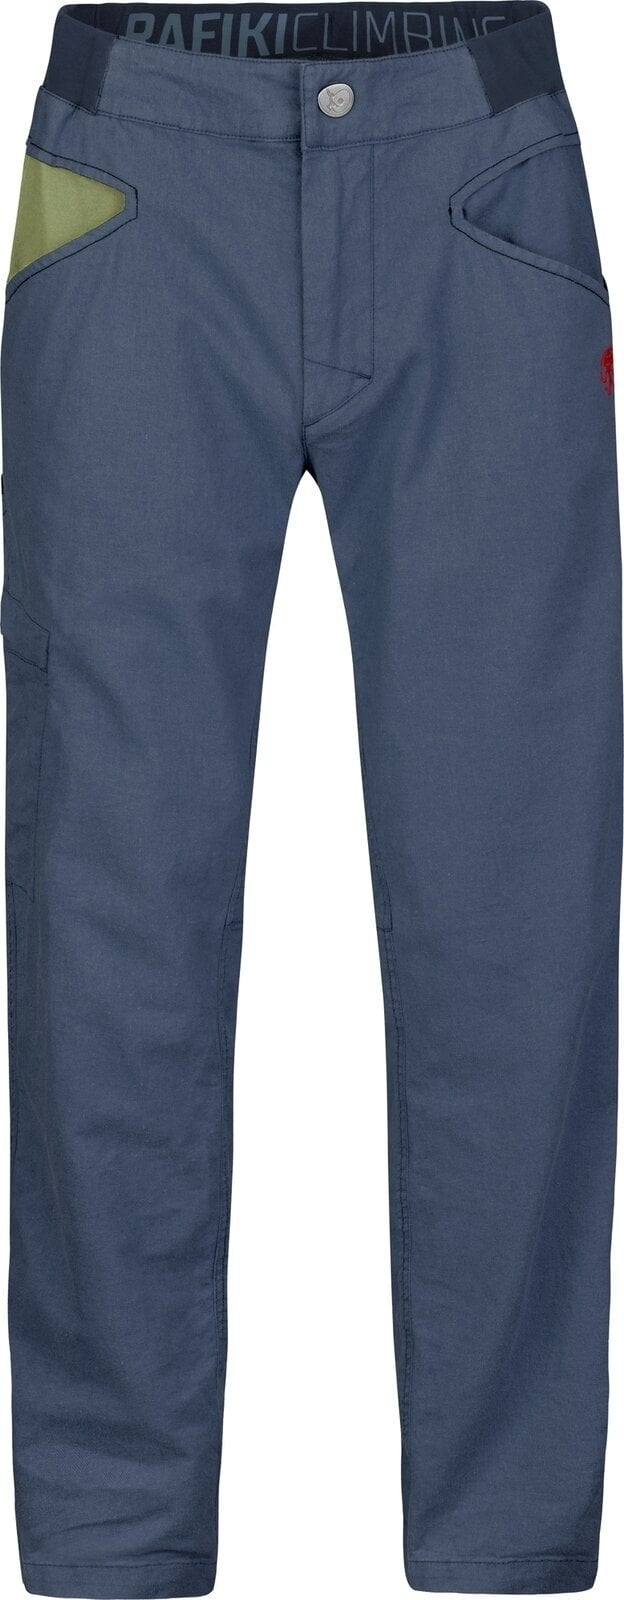 Outdoorové kalhoty Rafiki Grip Man Pants India Ink XL Outdoorové kalhoty